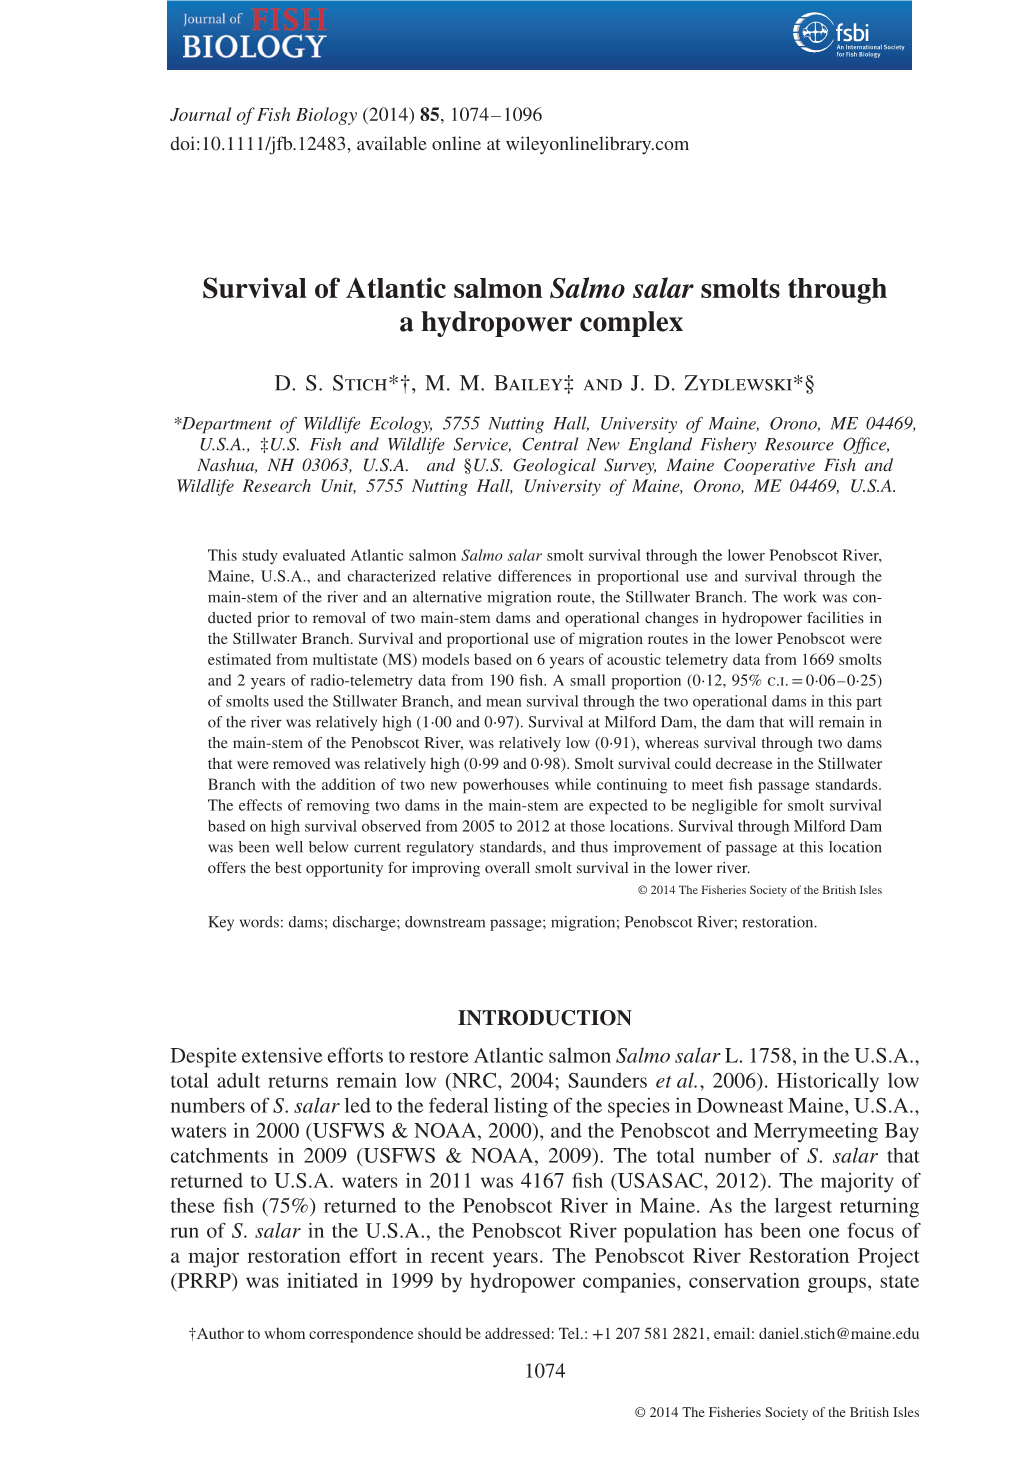 Survival of Atlantic Salmon Salmo Salar Smolts Through a Hydropower Complex